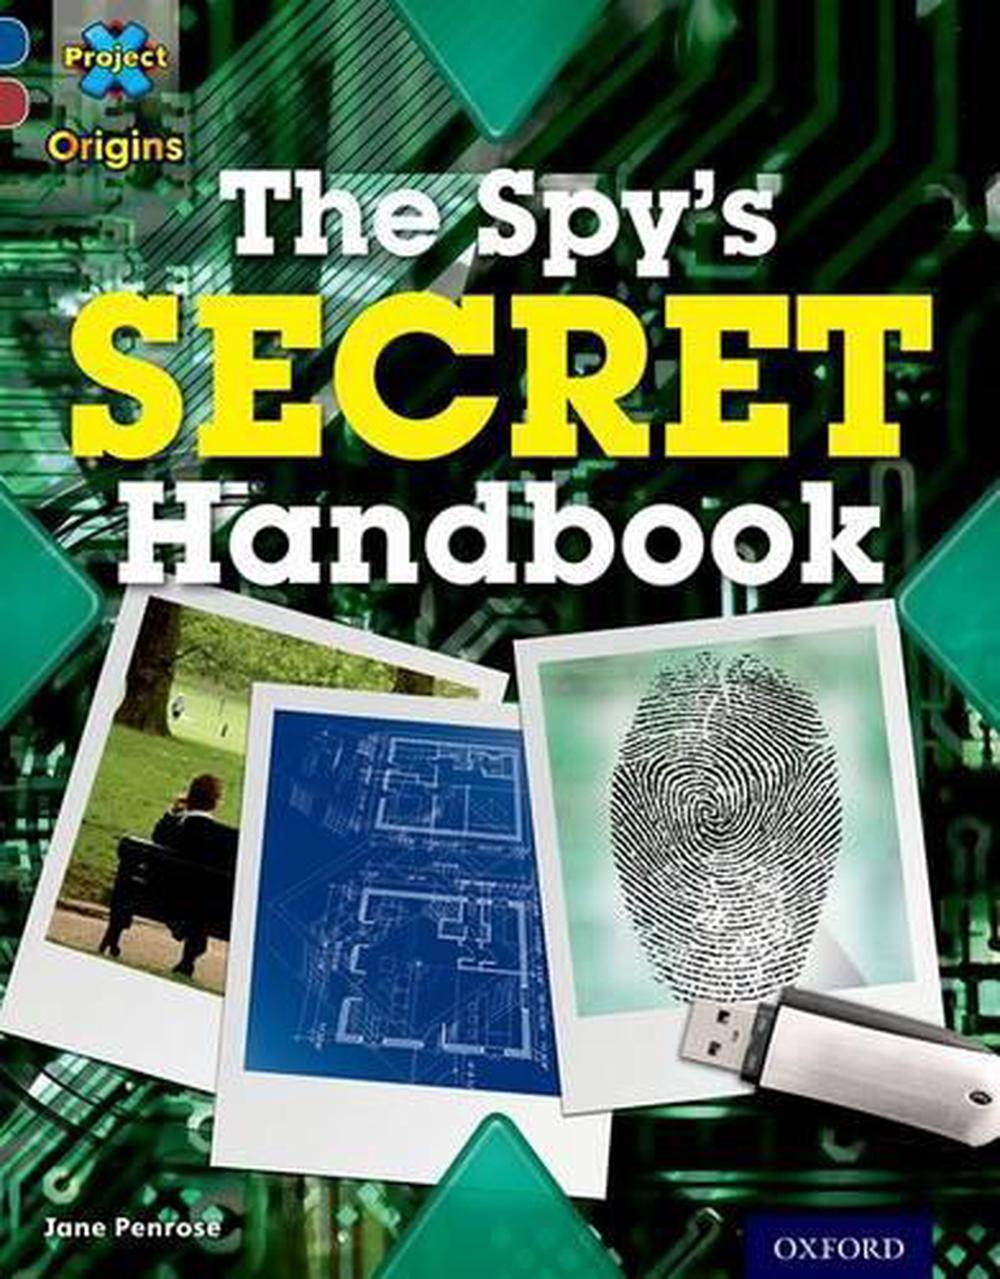 Project 1 book. Оксфорд голубая книга. Top Secret book. The Spy's Guidebook. English Blue book.